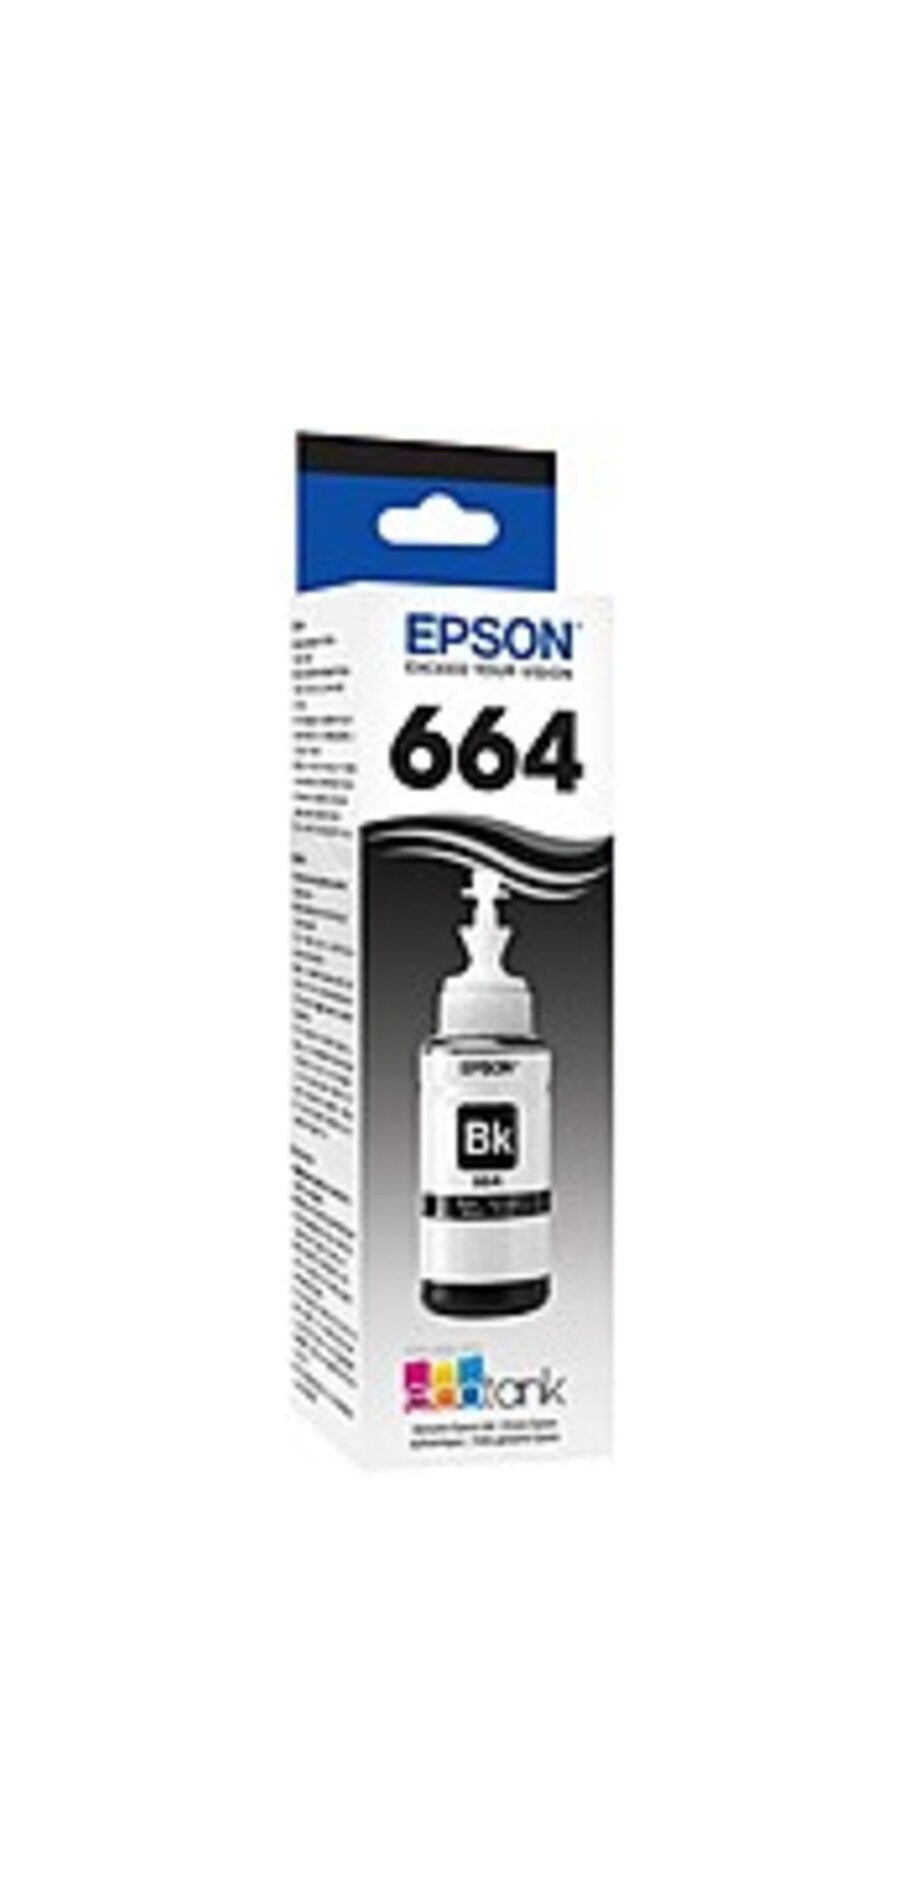 Epson EPST664120 70 ML Ink Bottle For ET-2500, ET-2550, And ET-4500 EcoTank Printers - 1 Pack - 4000 Pages - Black